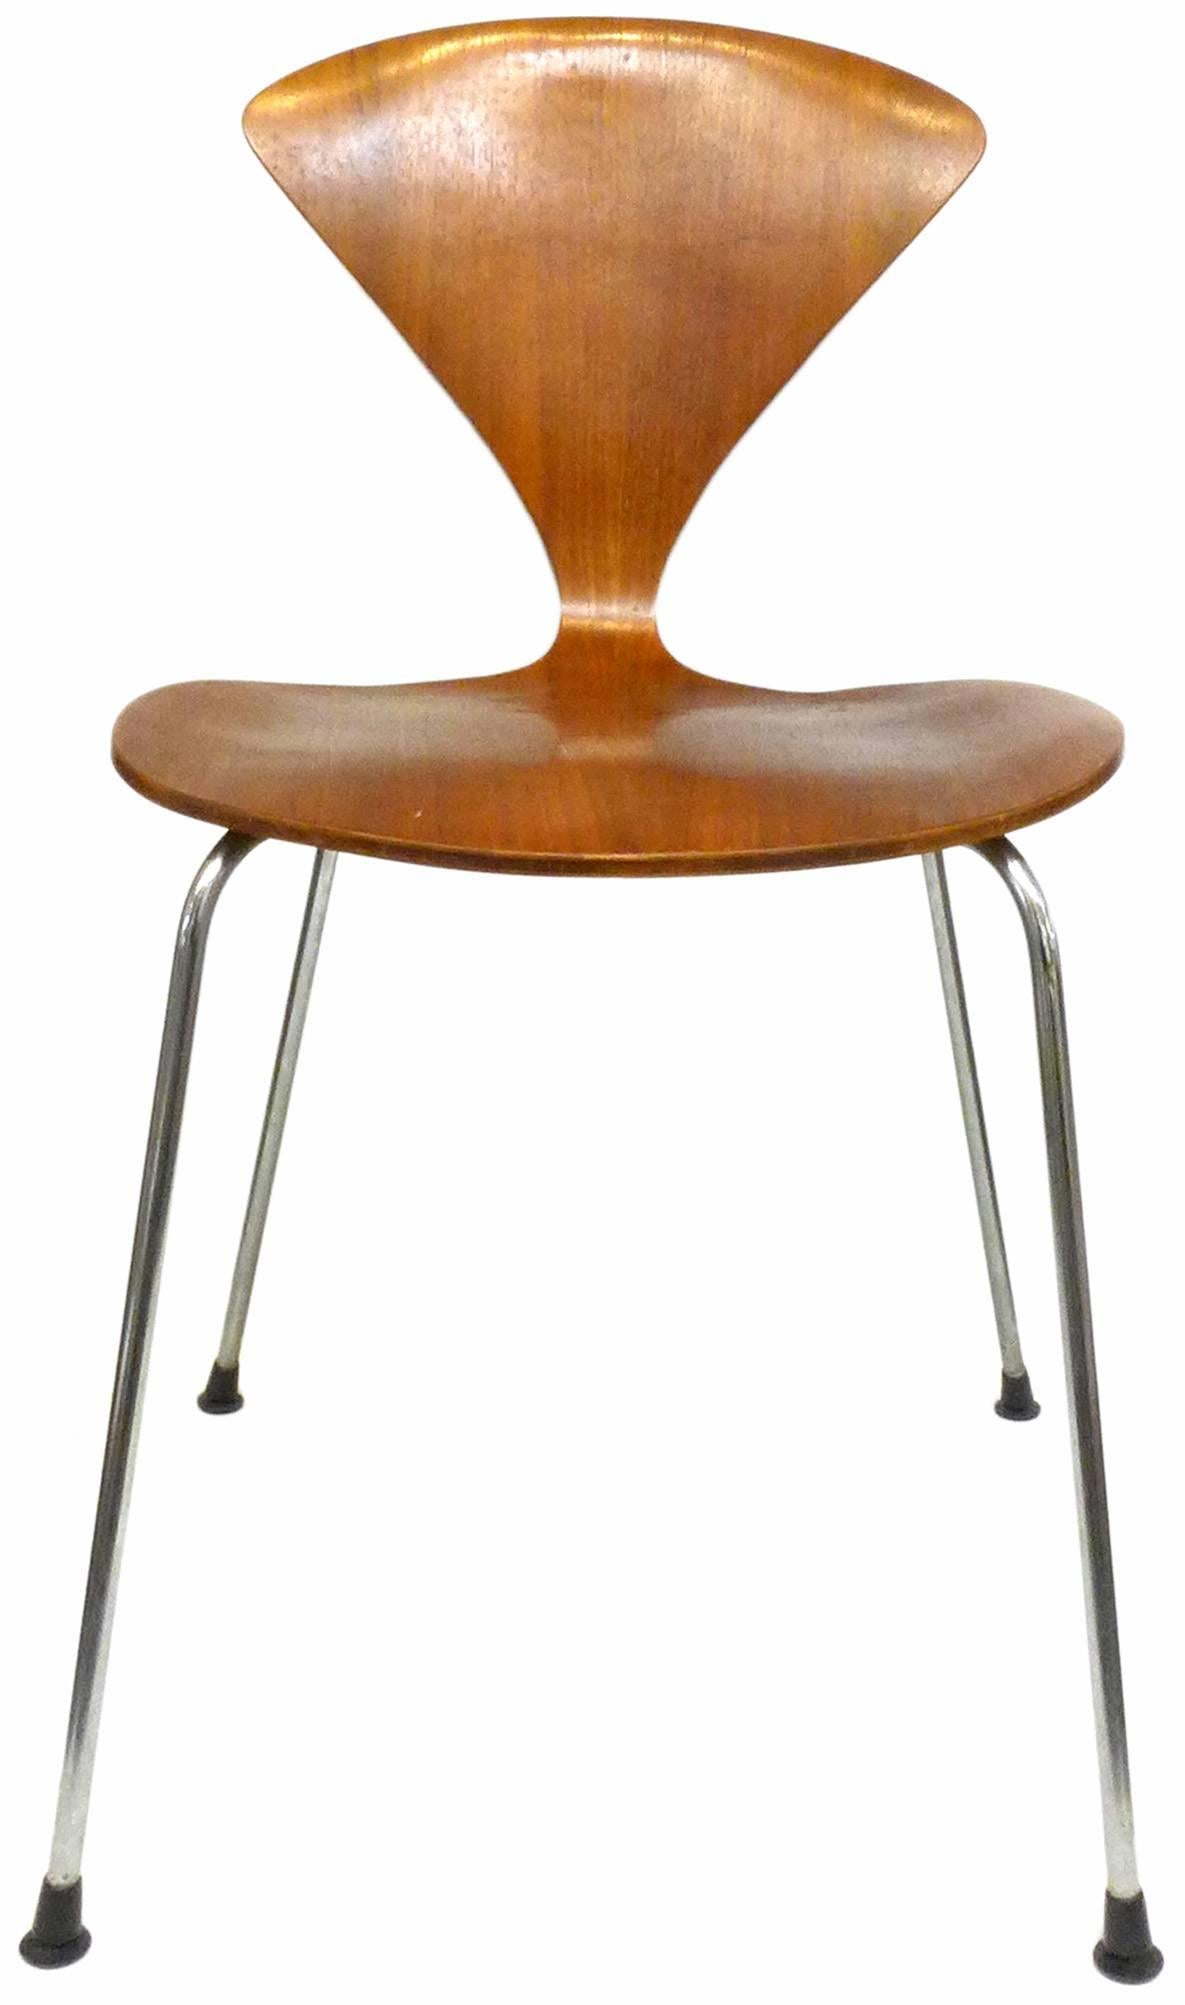 vintage cherner chair